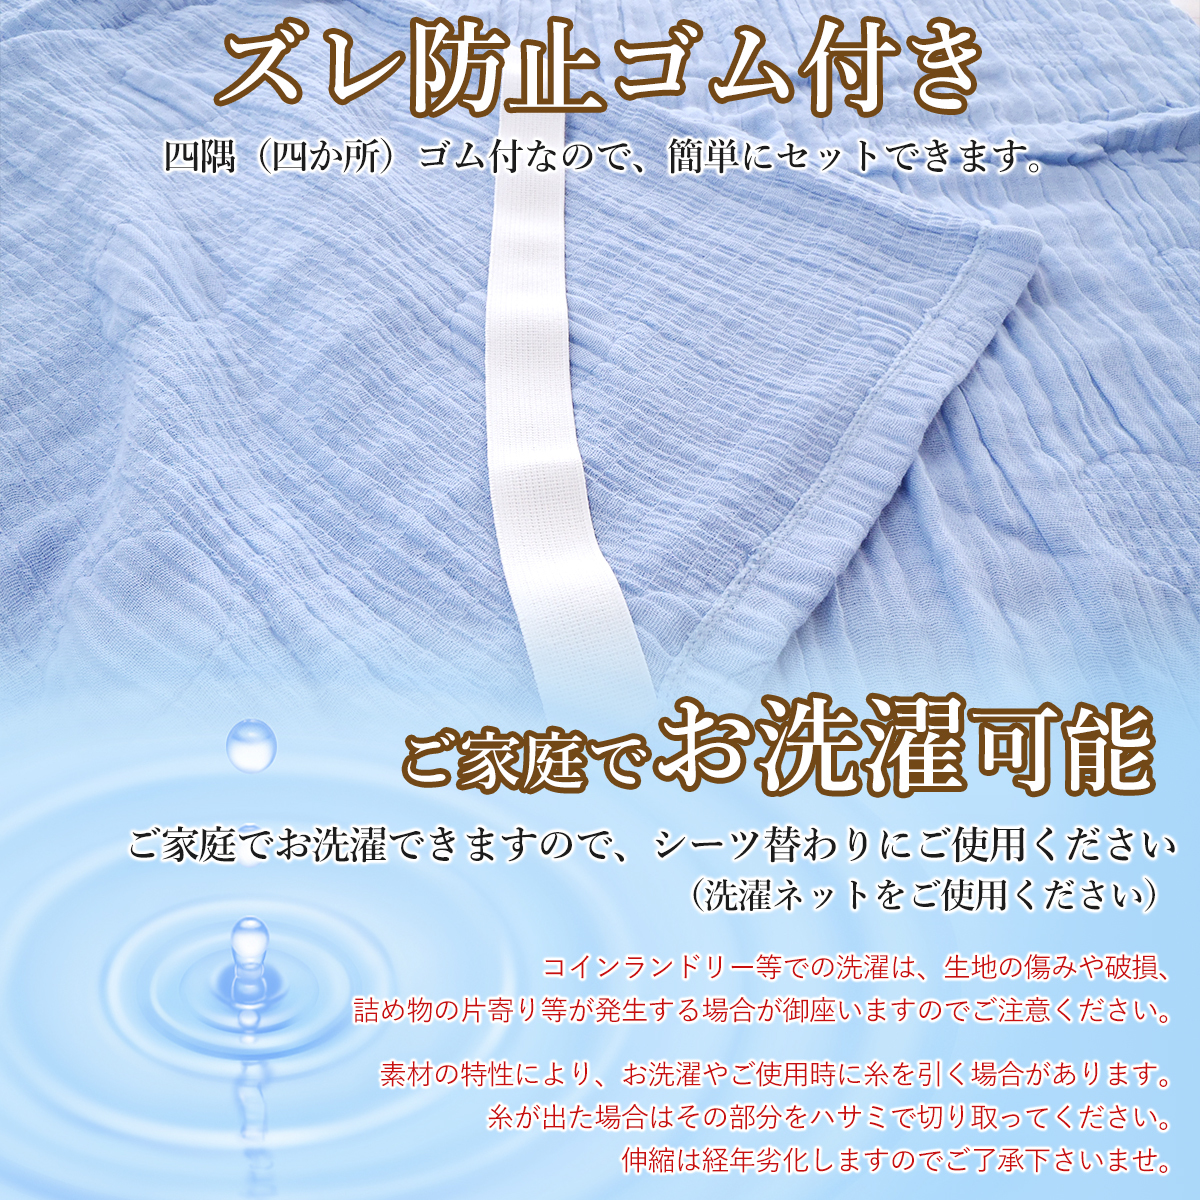  romance small Japanese cedar 5 -ply gauze sheet single bed pad sheet made in Japan gauze ...